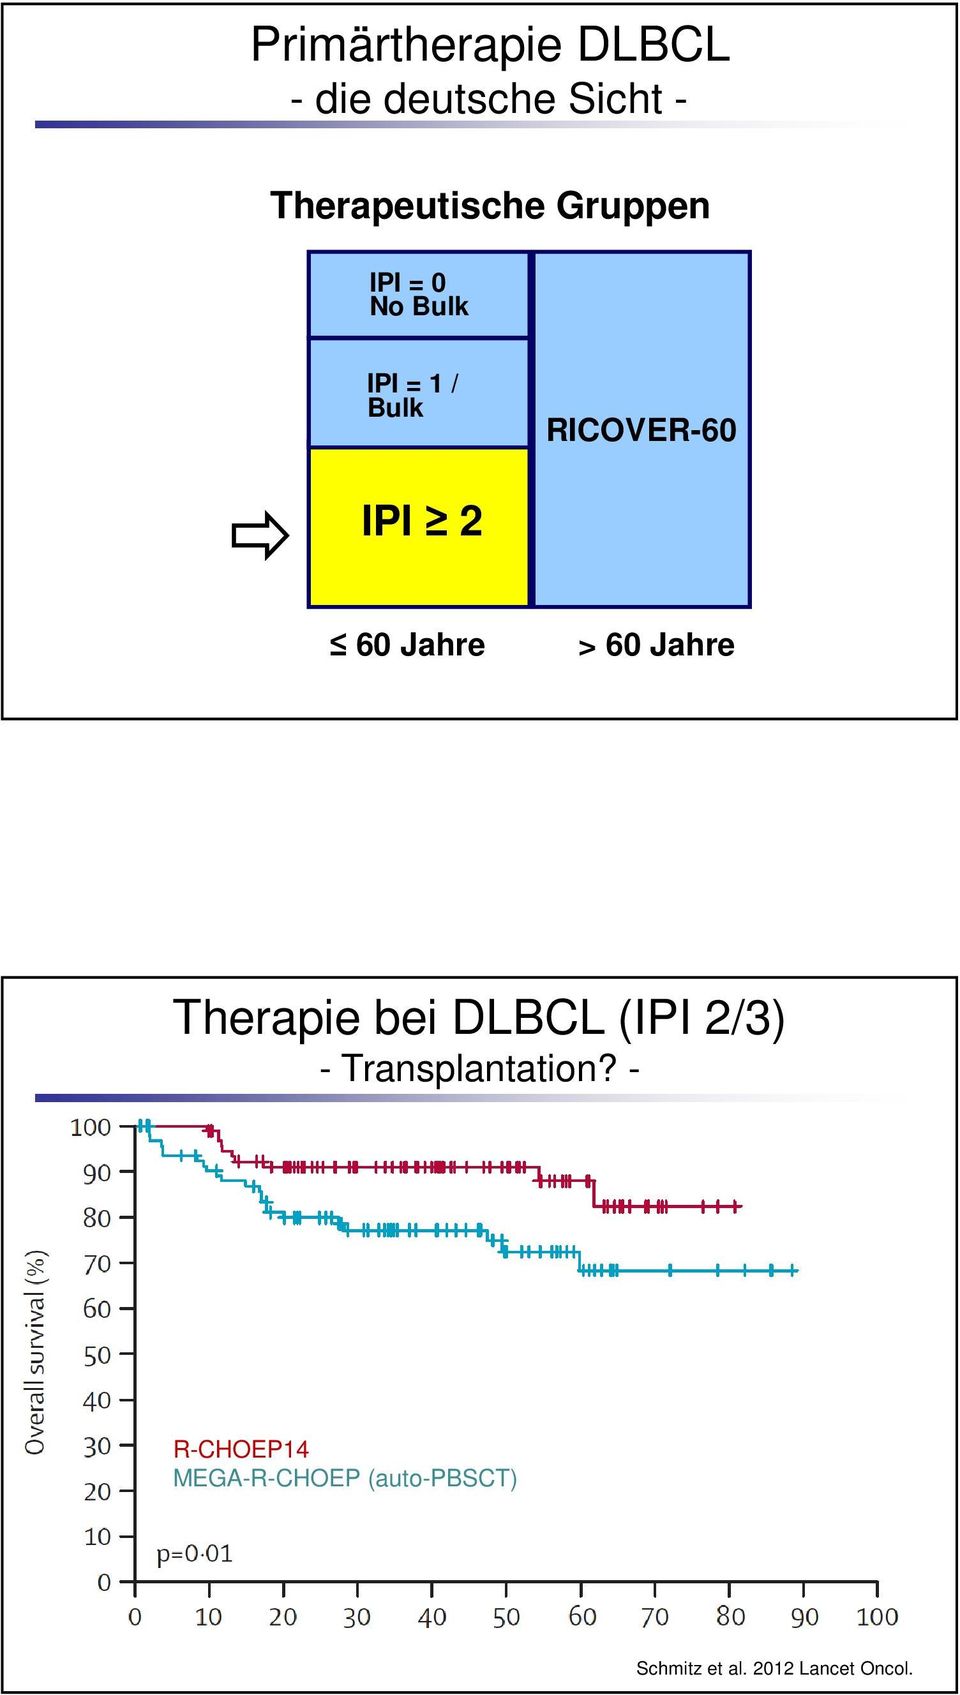 RICOVER-60 > 60 Jahre Therapie bei DLBCL (IPI 2/3) -